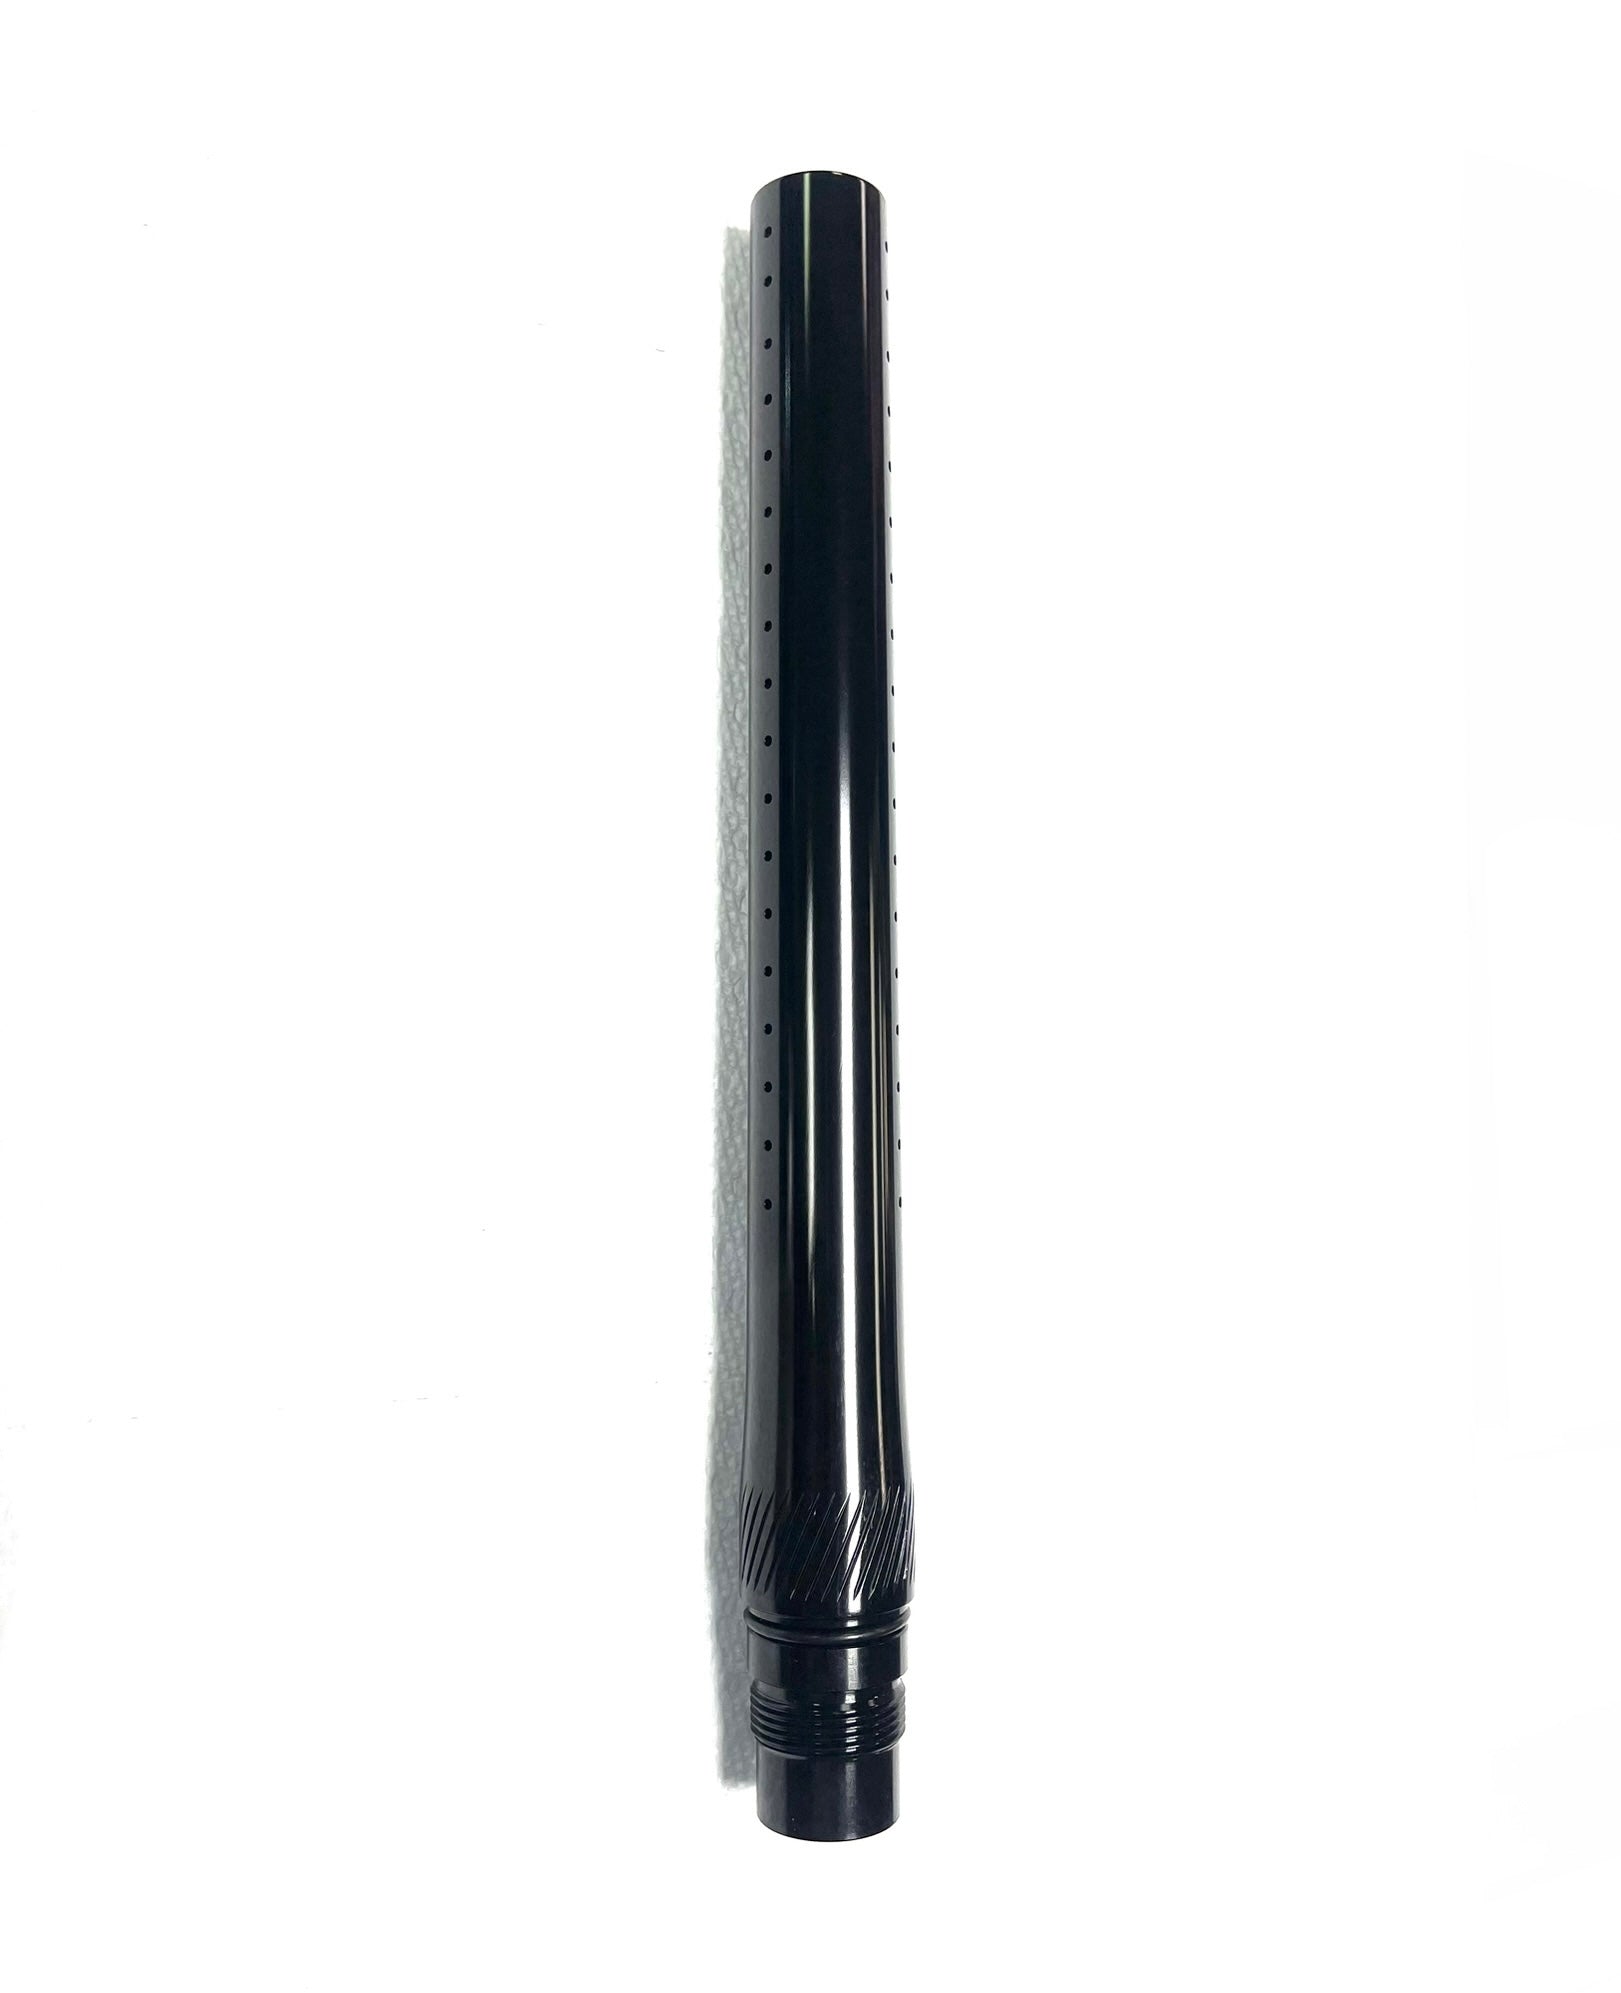 Freak XL Barrel Front - Freak Porting - 14 Inch - Polished Black (New Style)